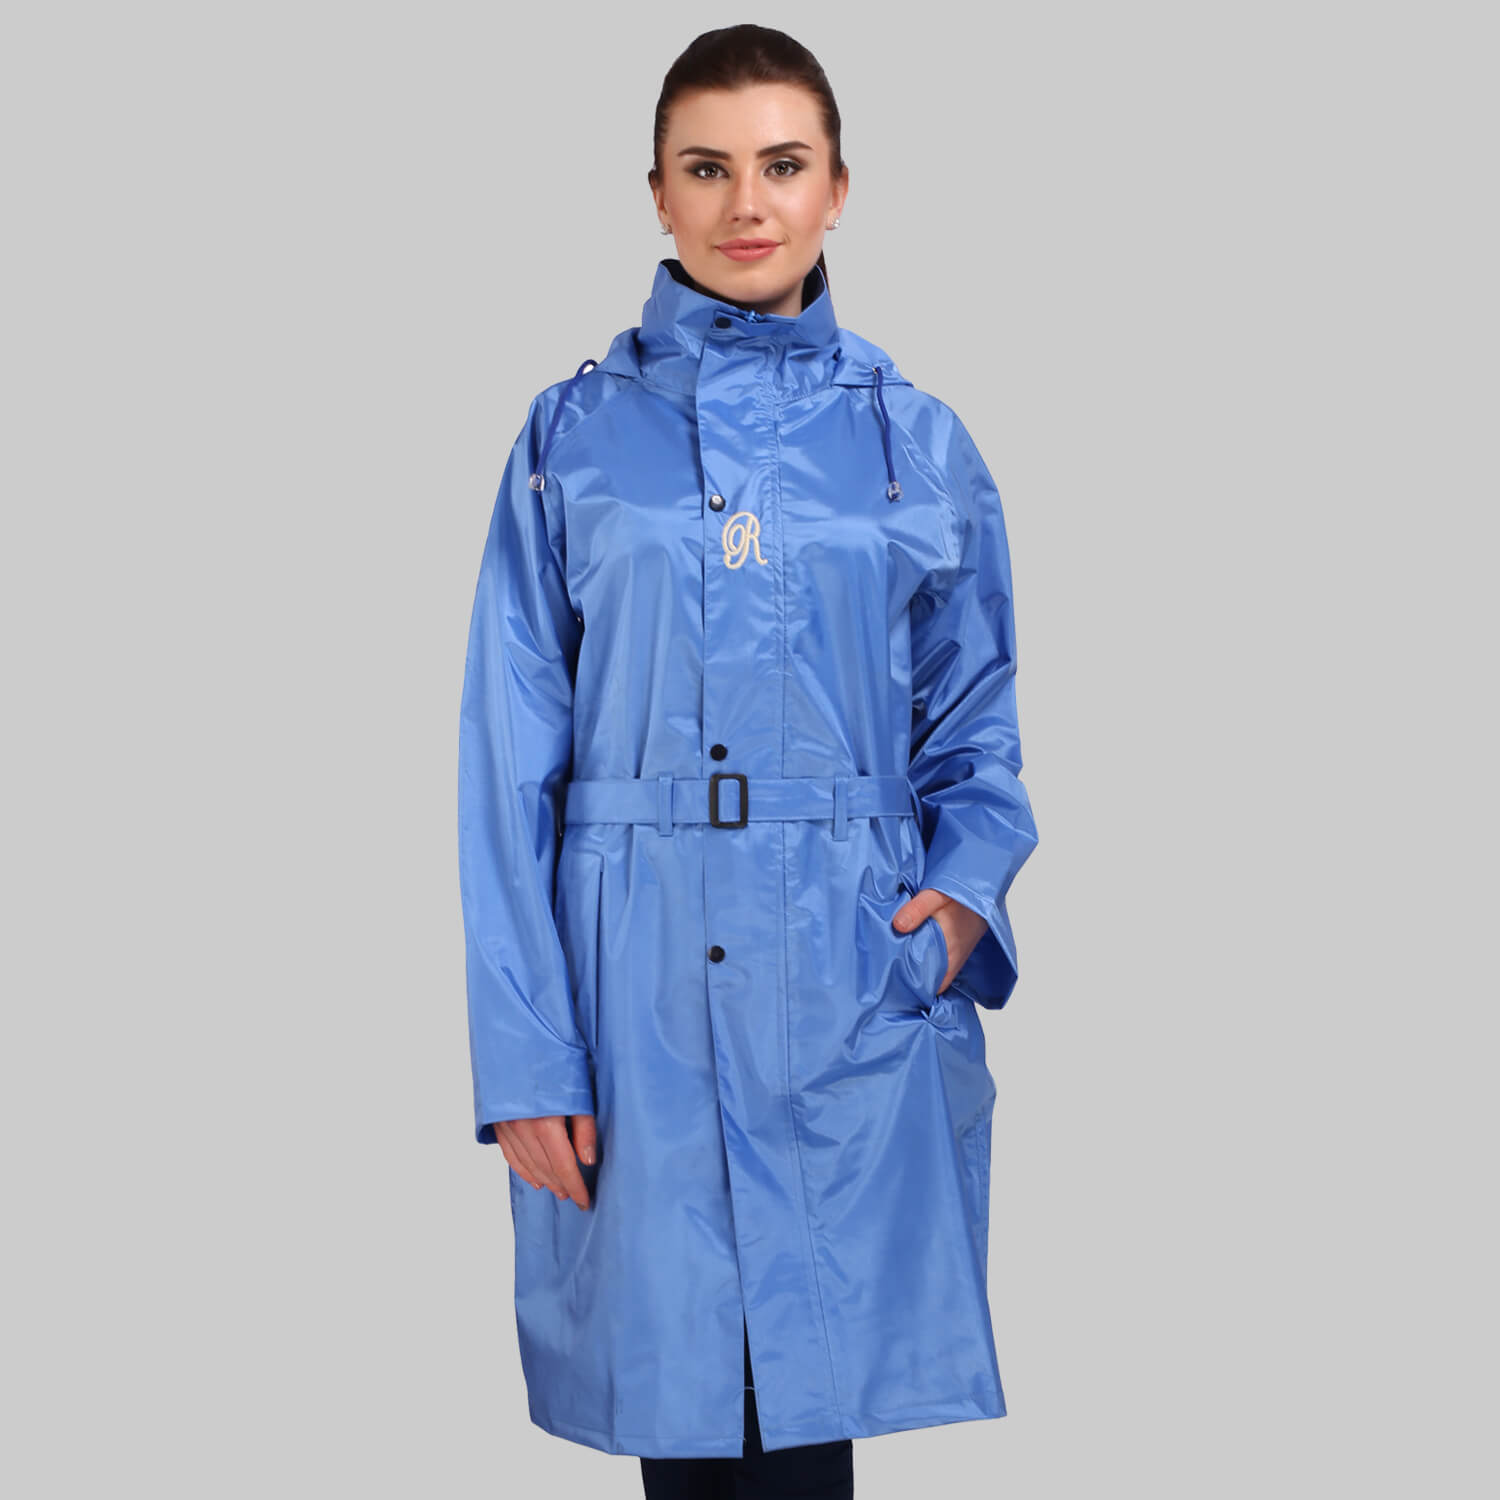 PARKER COAT - Real Rain Wear Retail